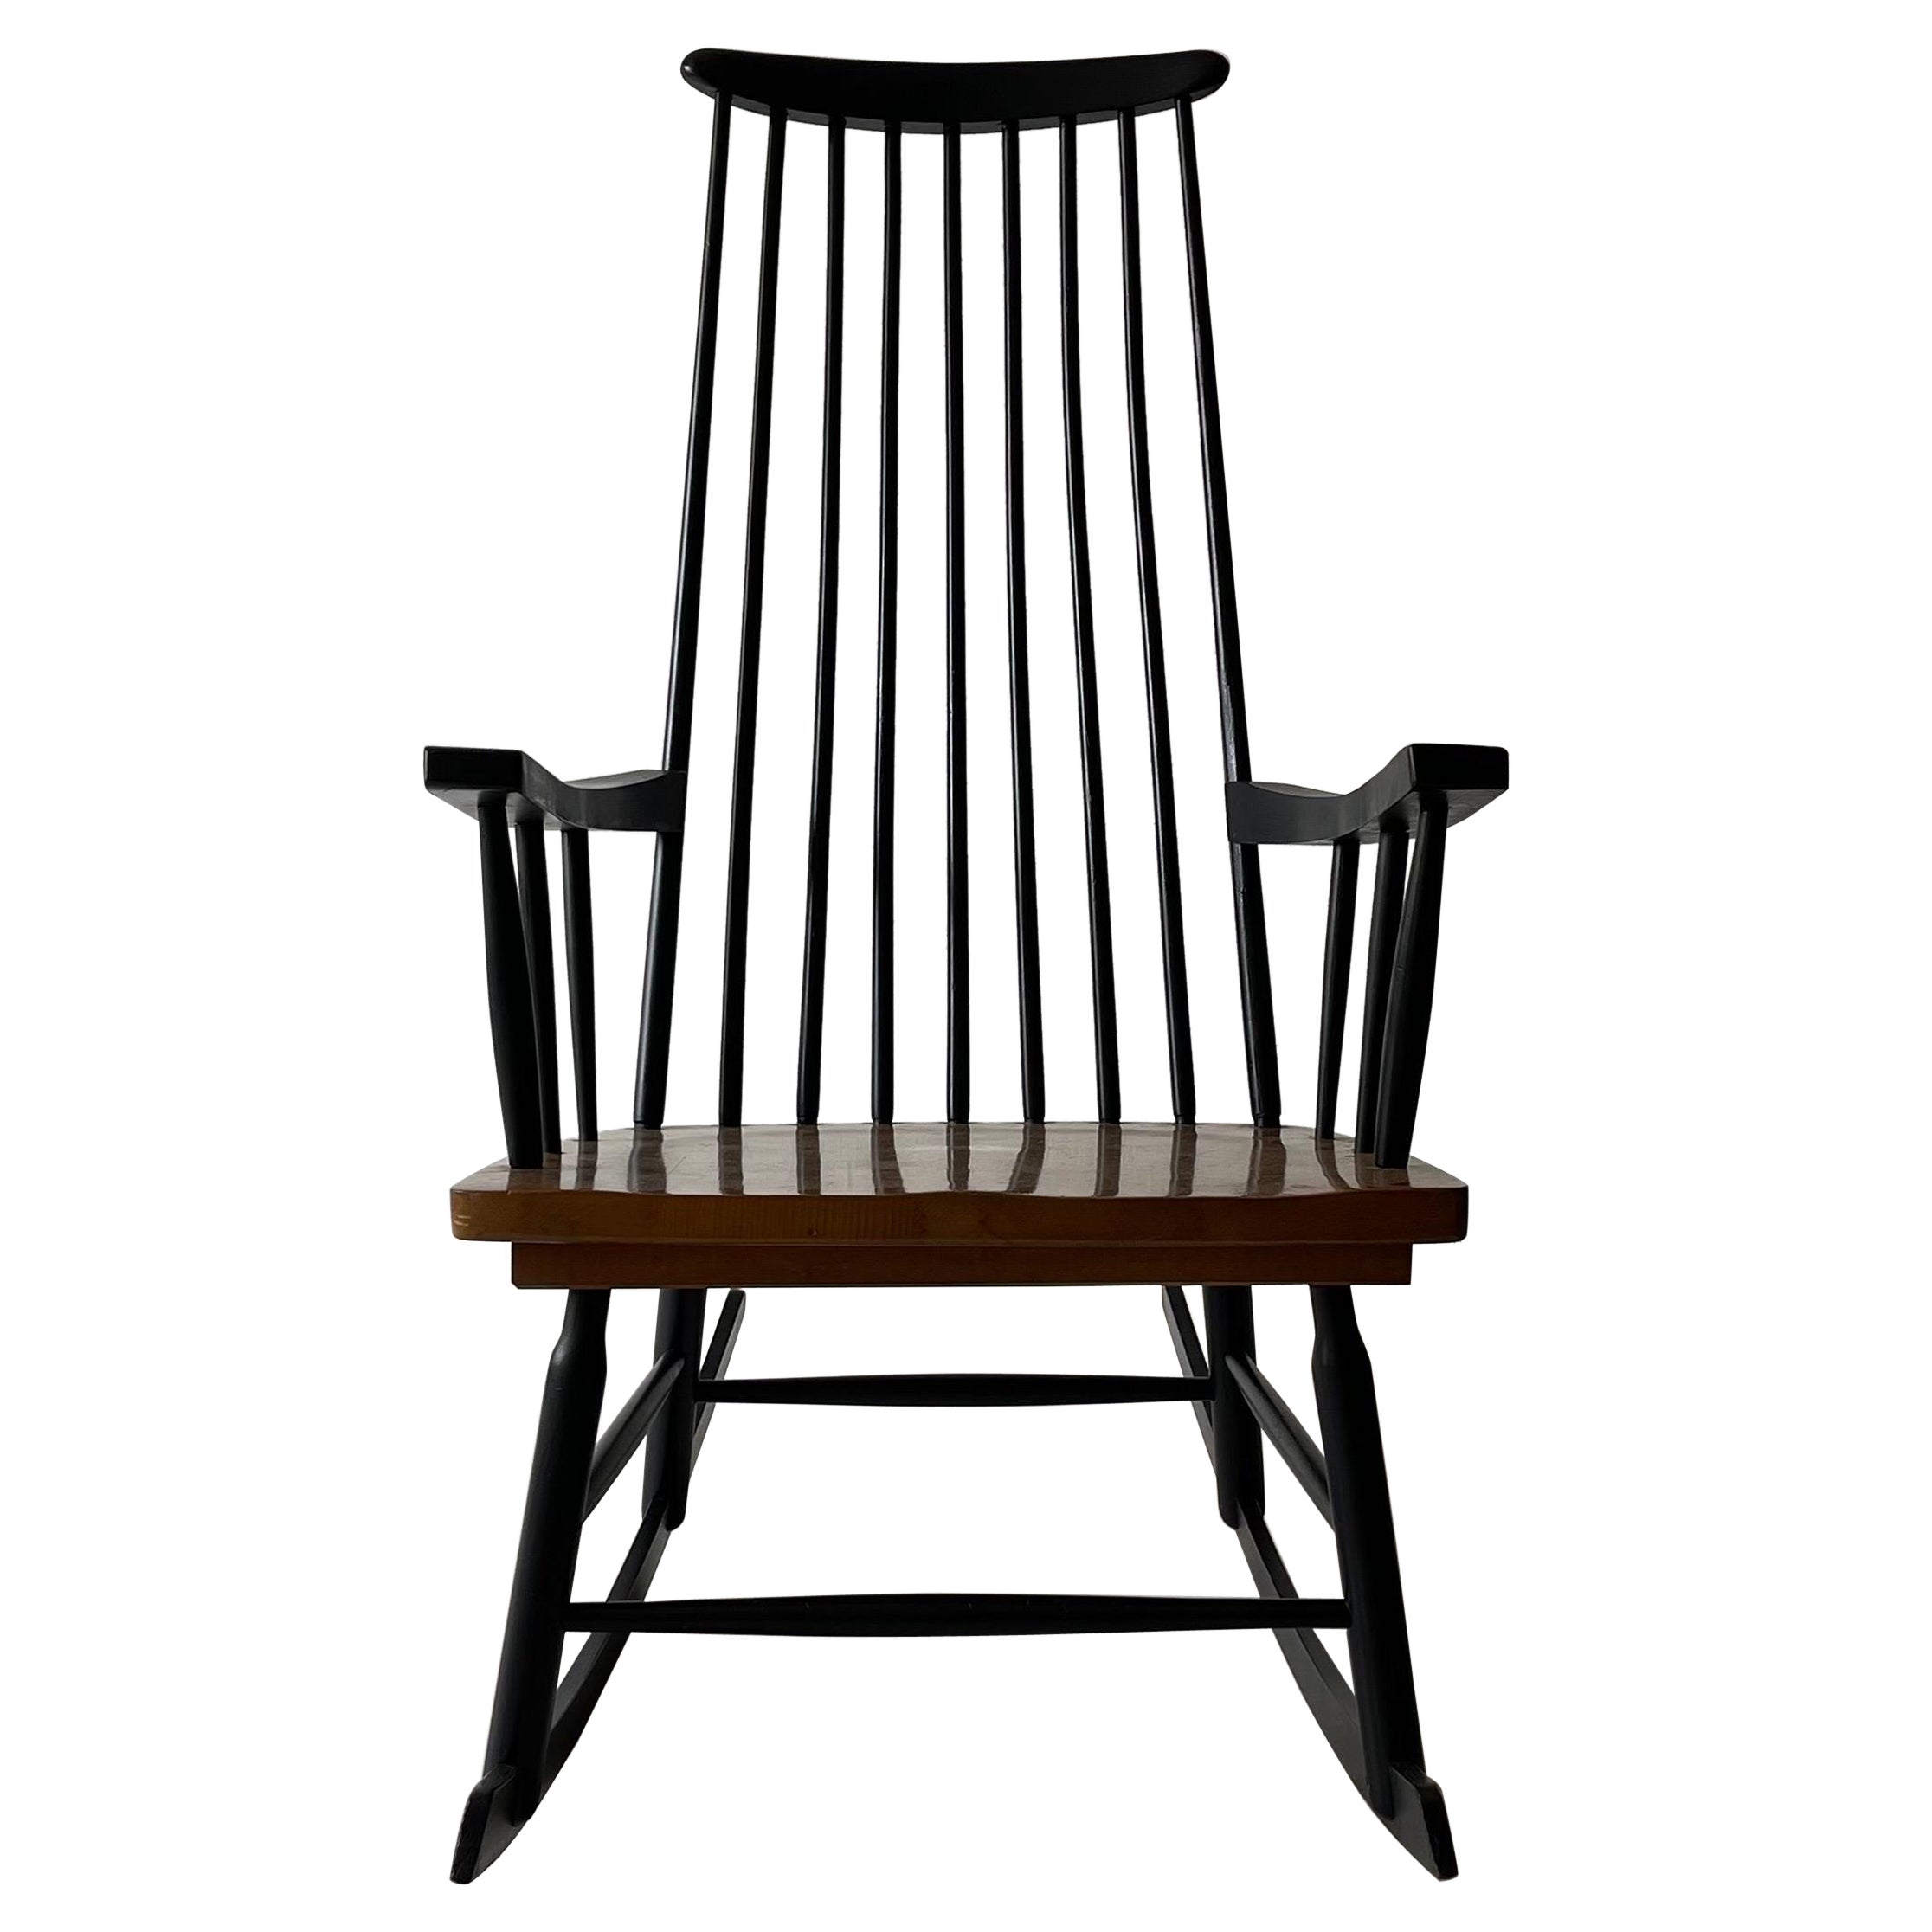 Mid-Century Modern Scandinavian Rocking Chair 1950s